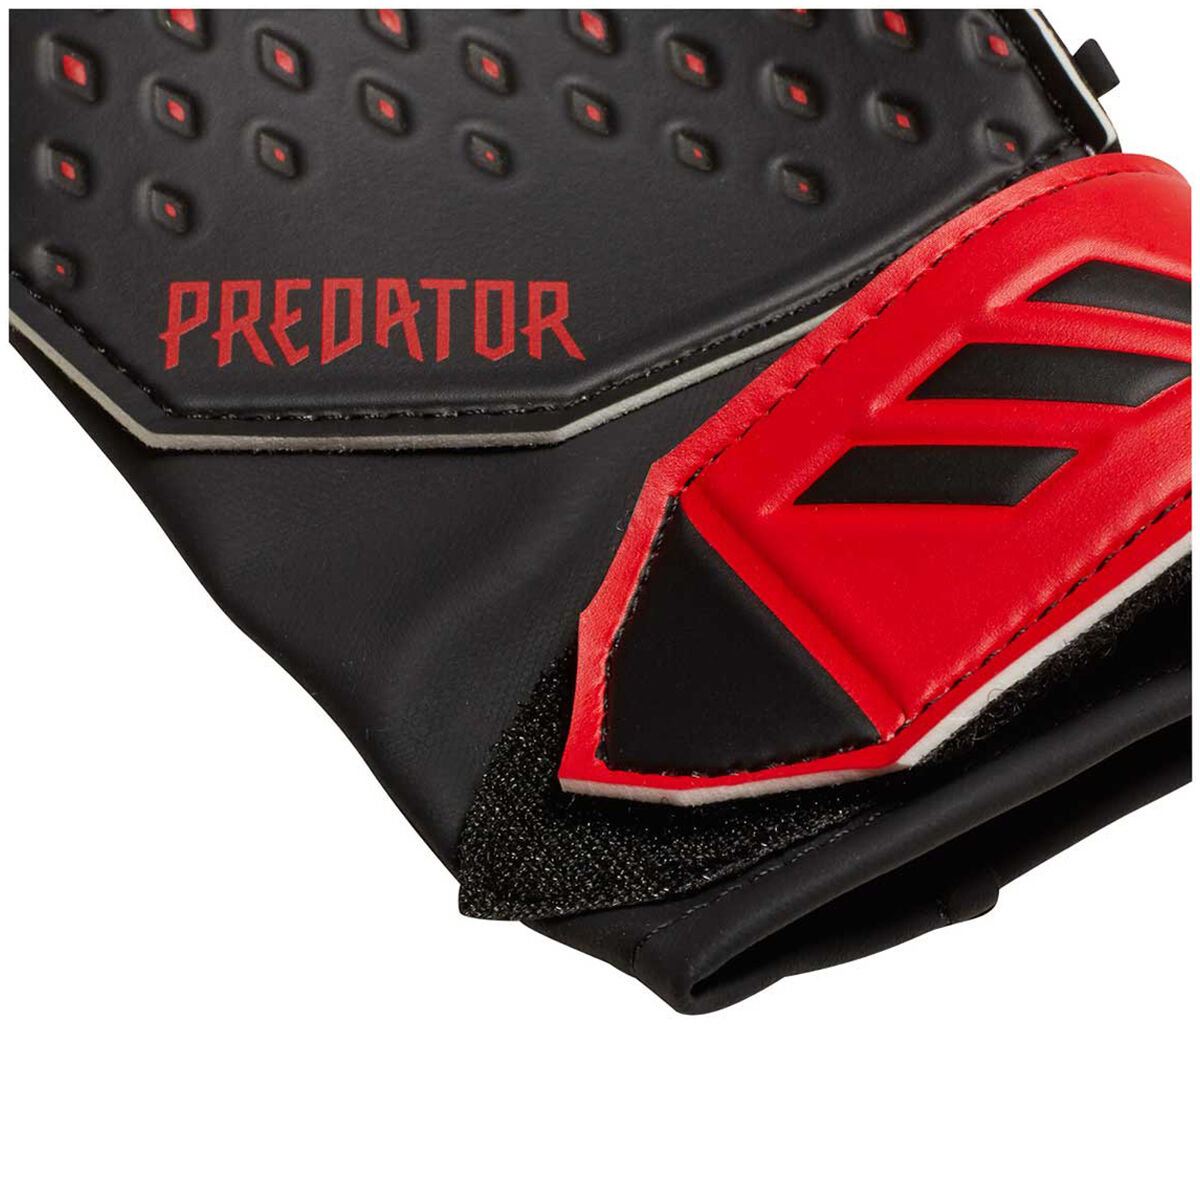 Predator Mutator 20+ Firm Ground Boots adidas SG